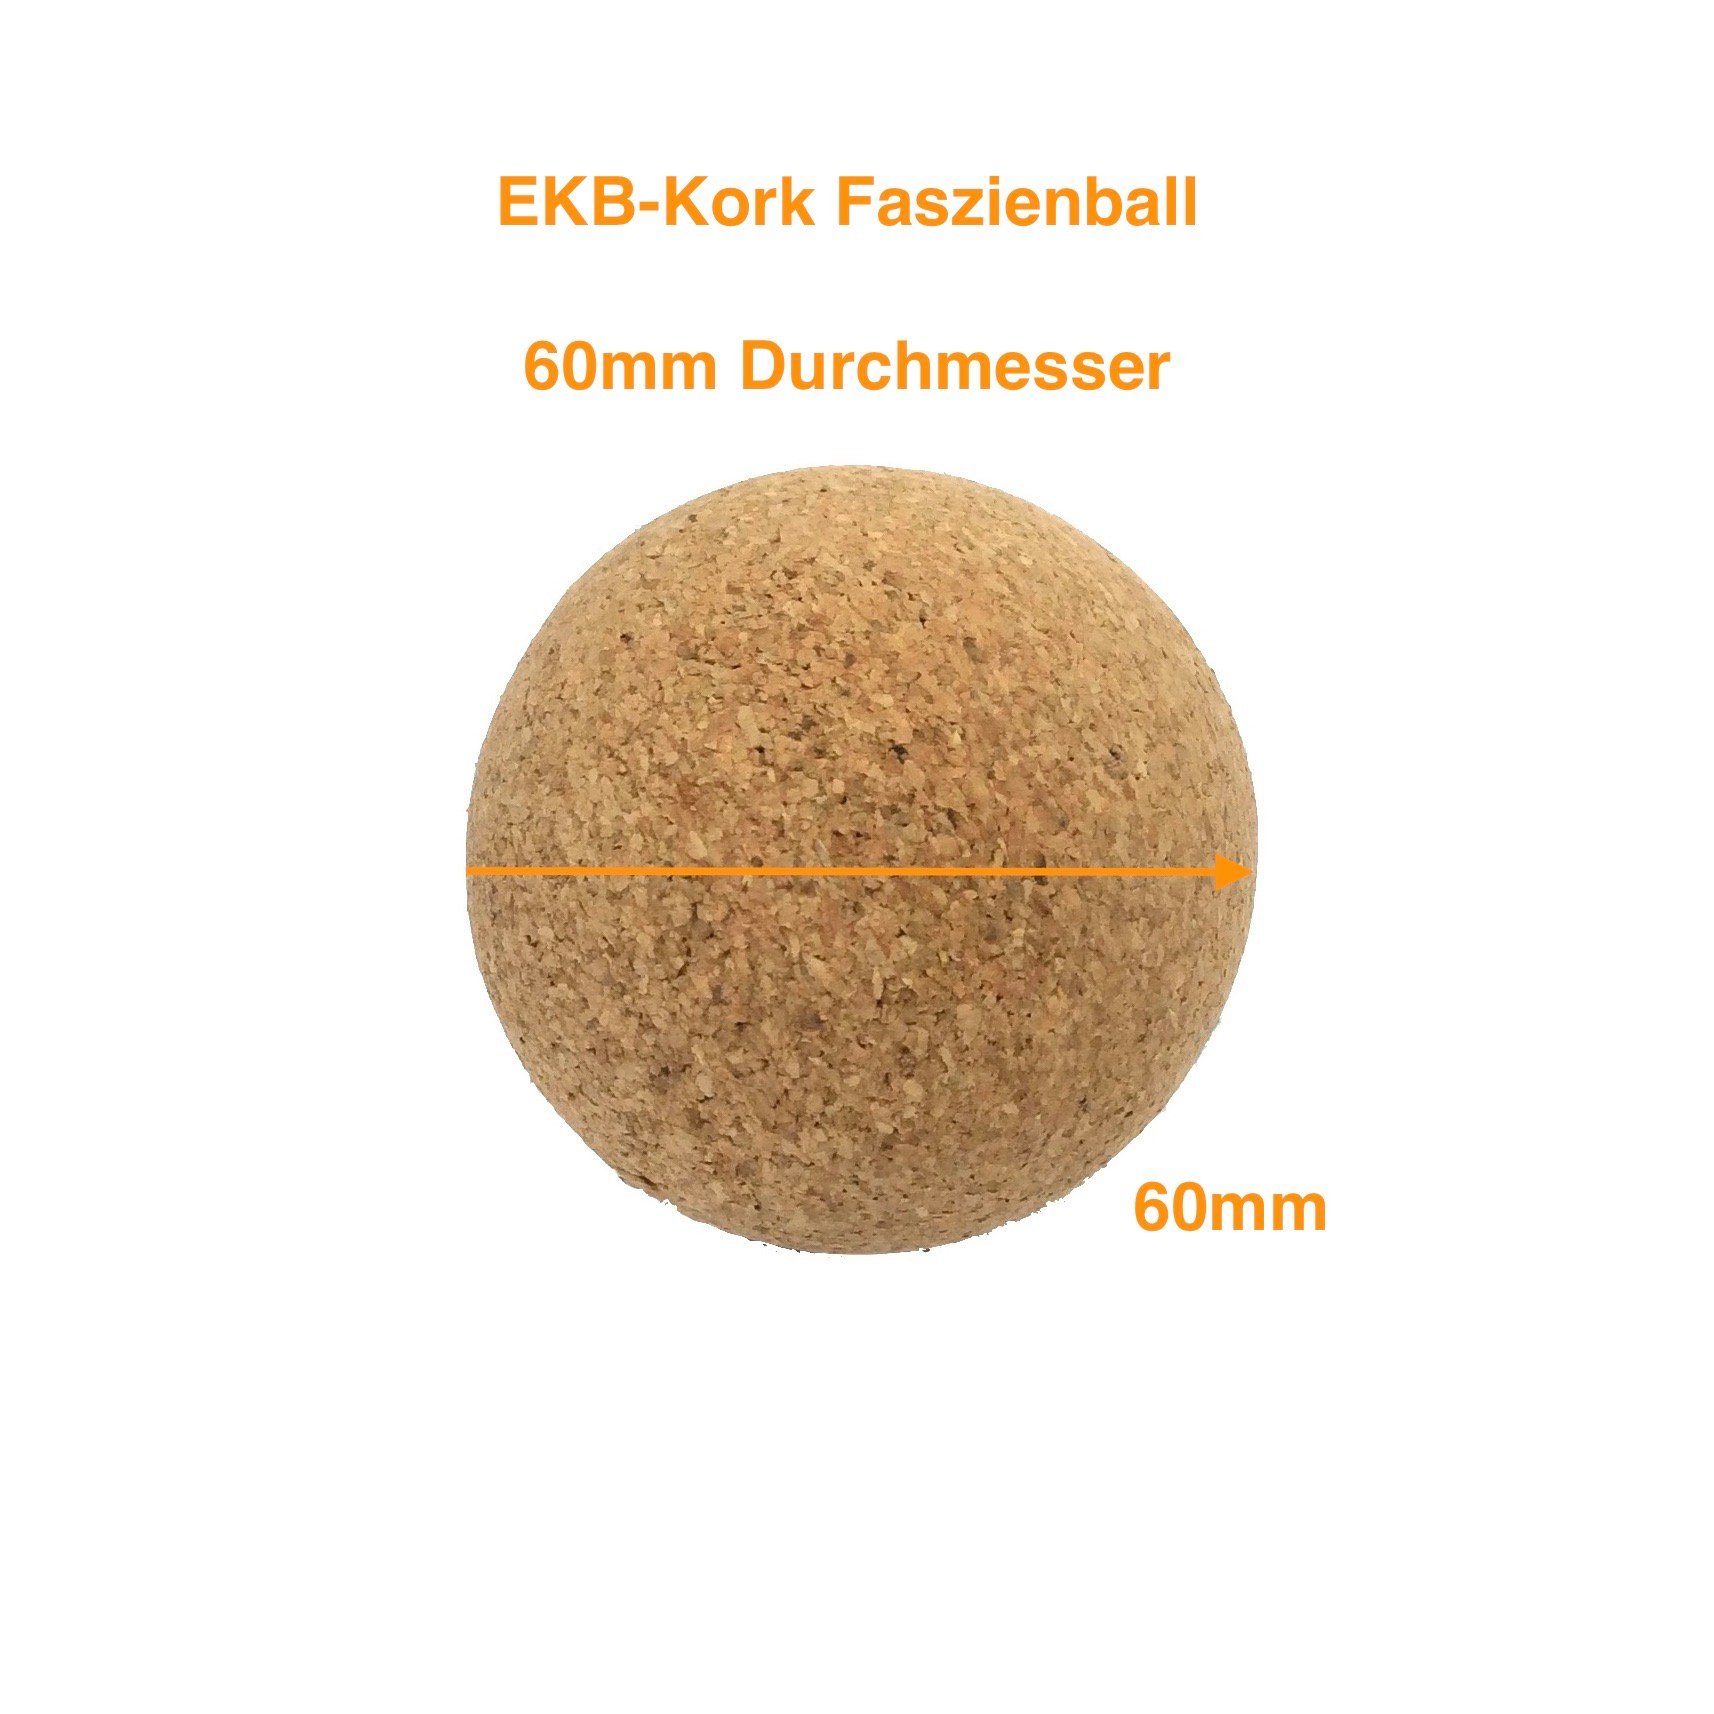 Massage Spielzeug 60mm Faszienball Kork EKB-Kork Yogablock Faszien Basteln Kugel